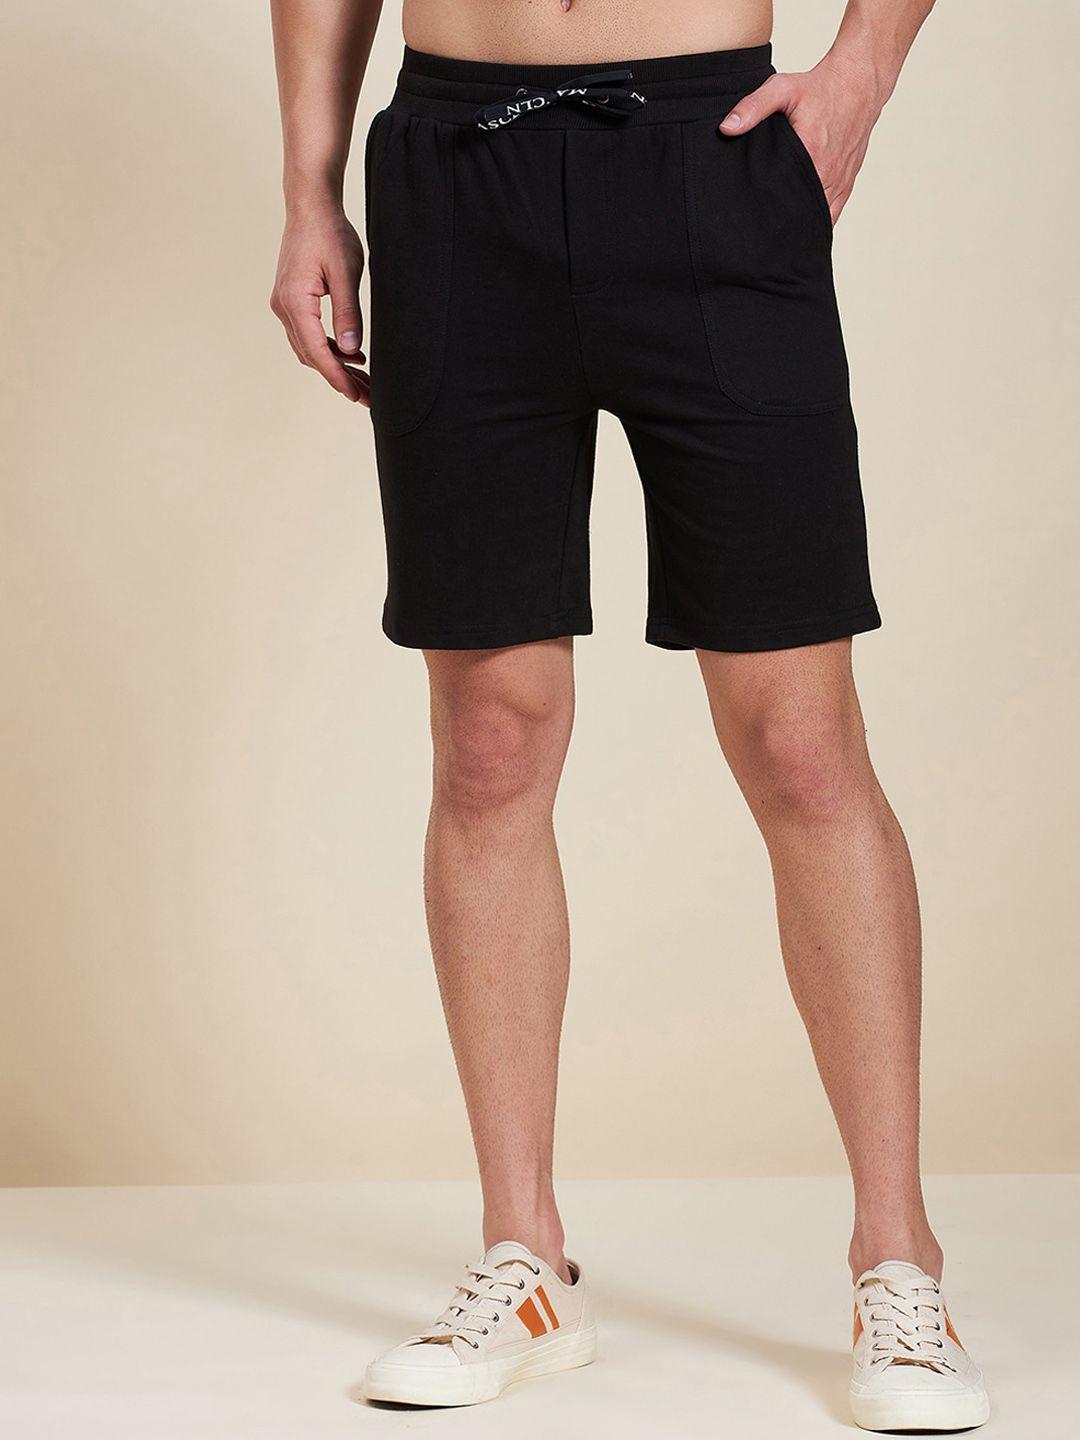 mascln sassafras men black high-rise shorts